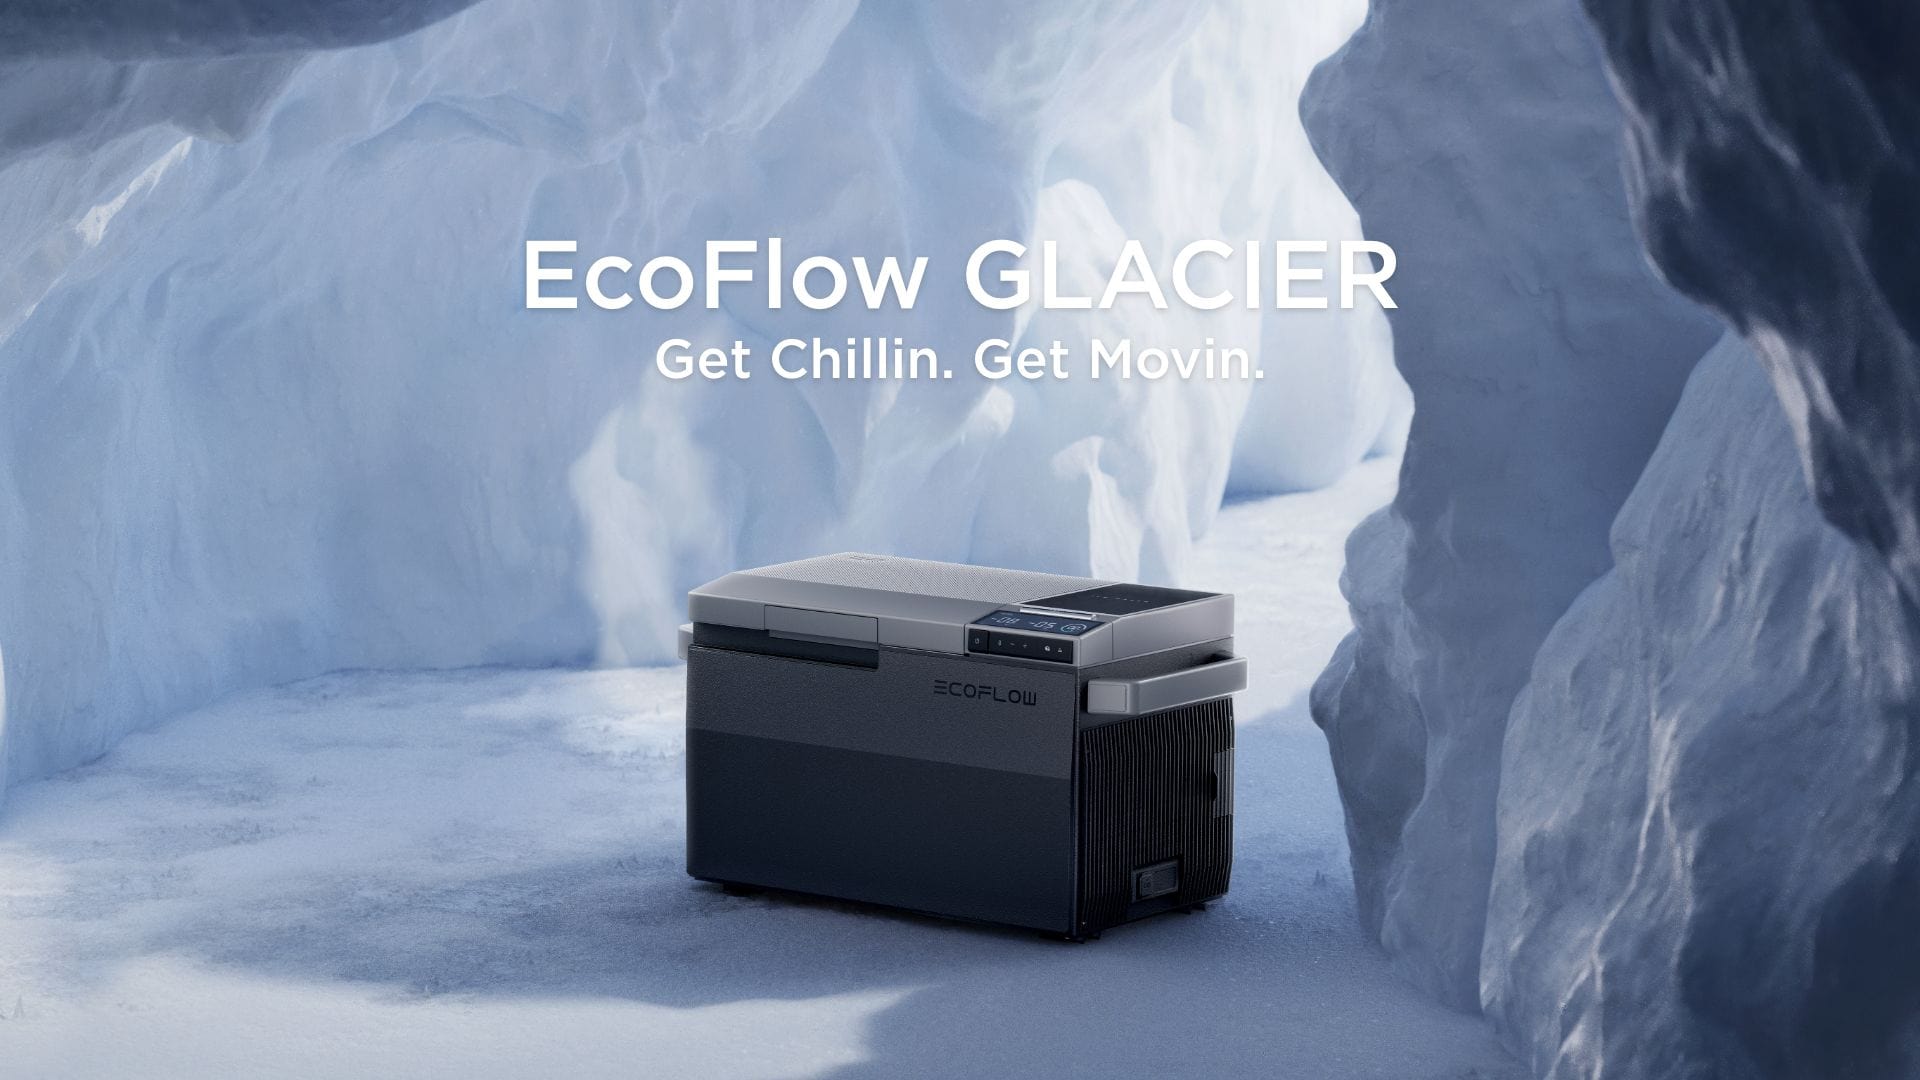 Ecoflow Glacier